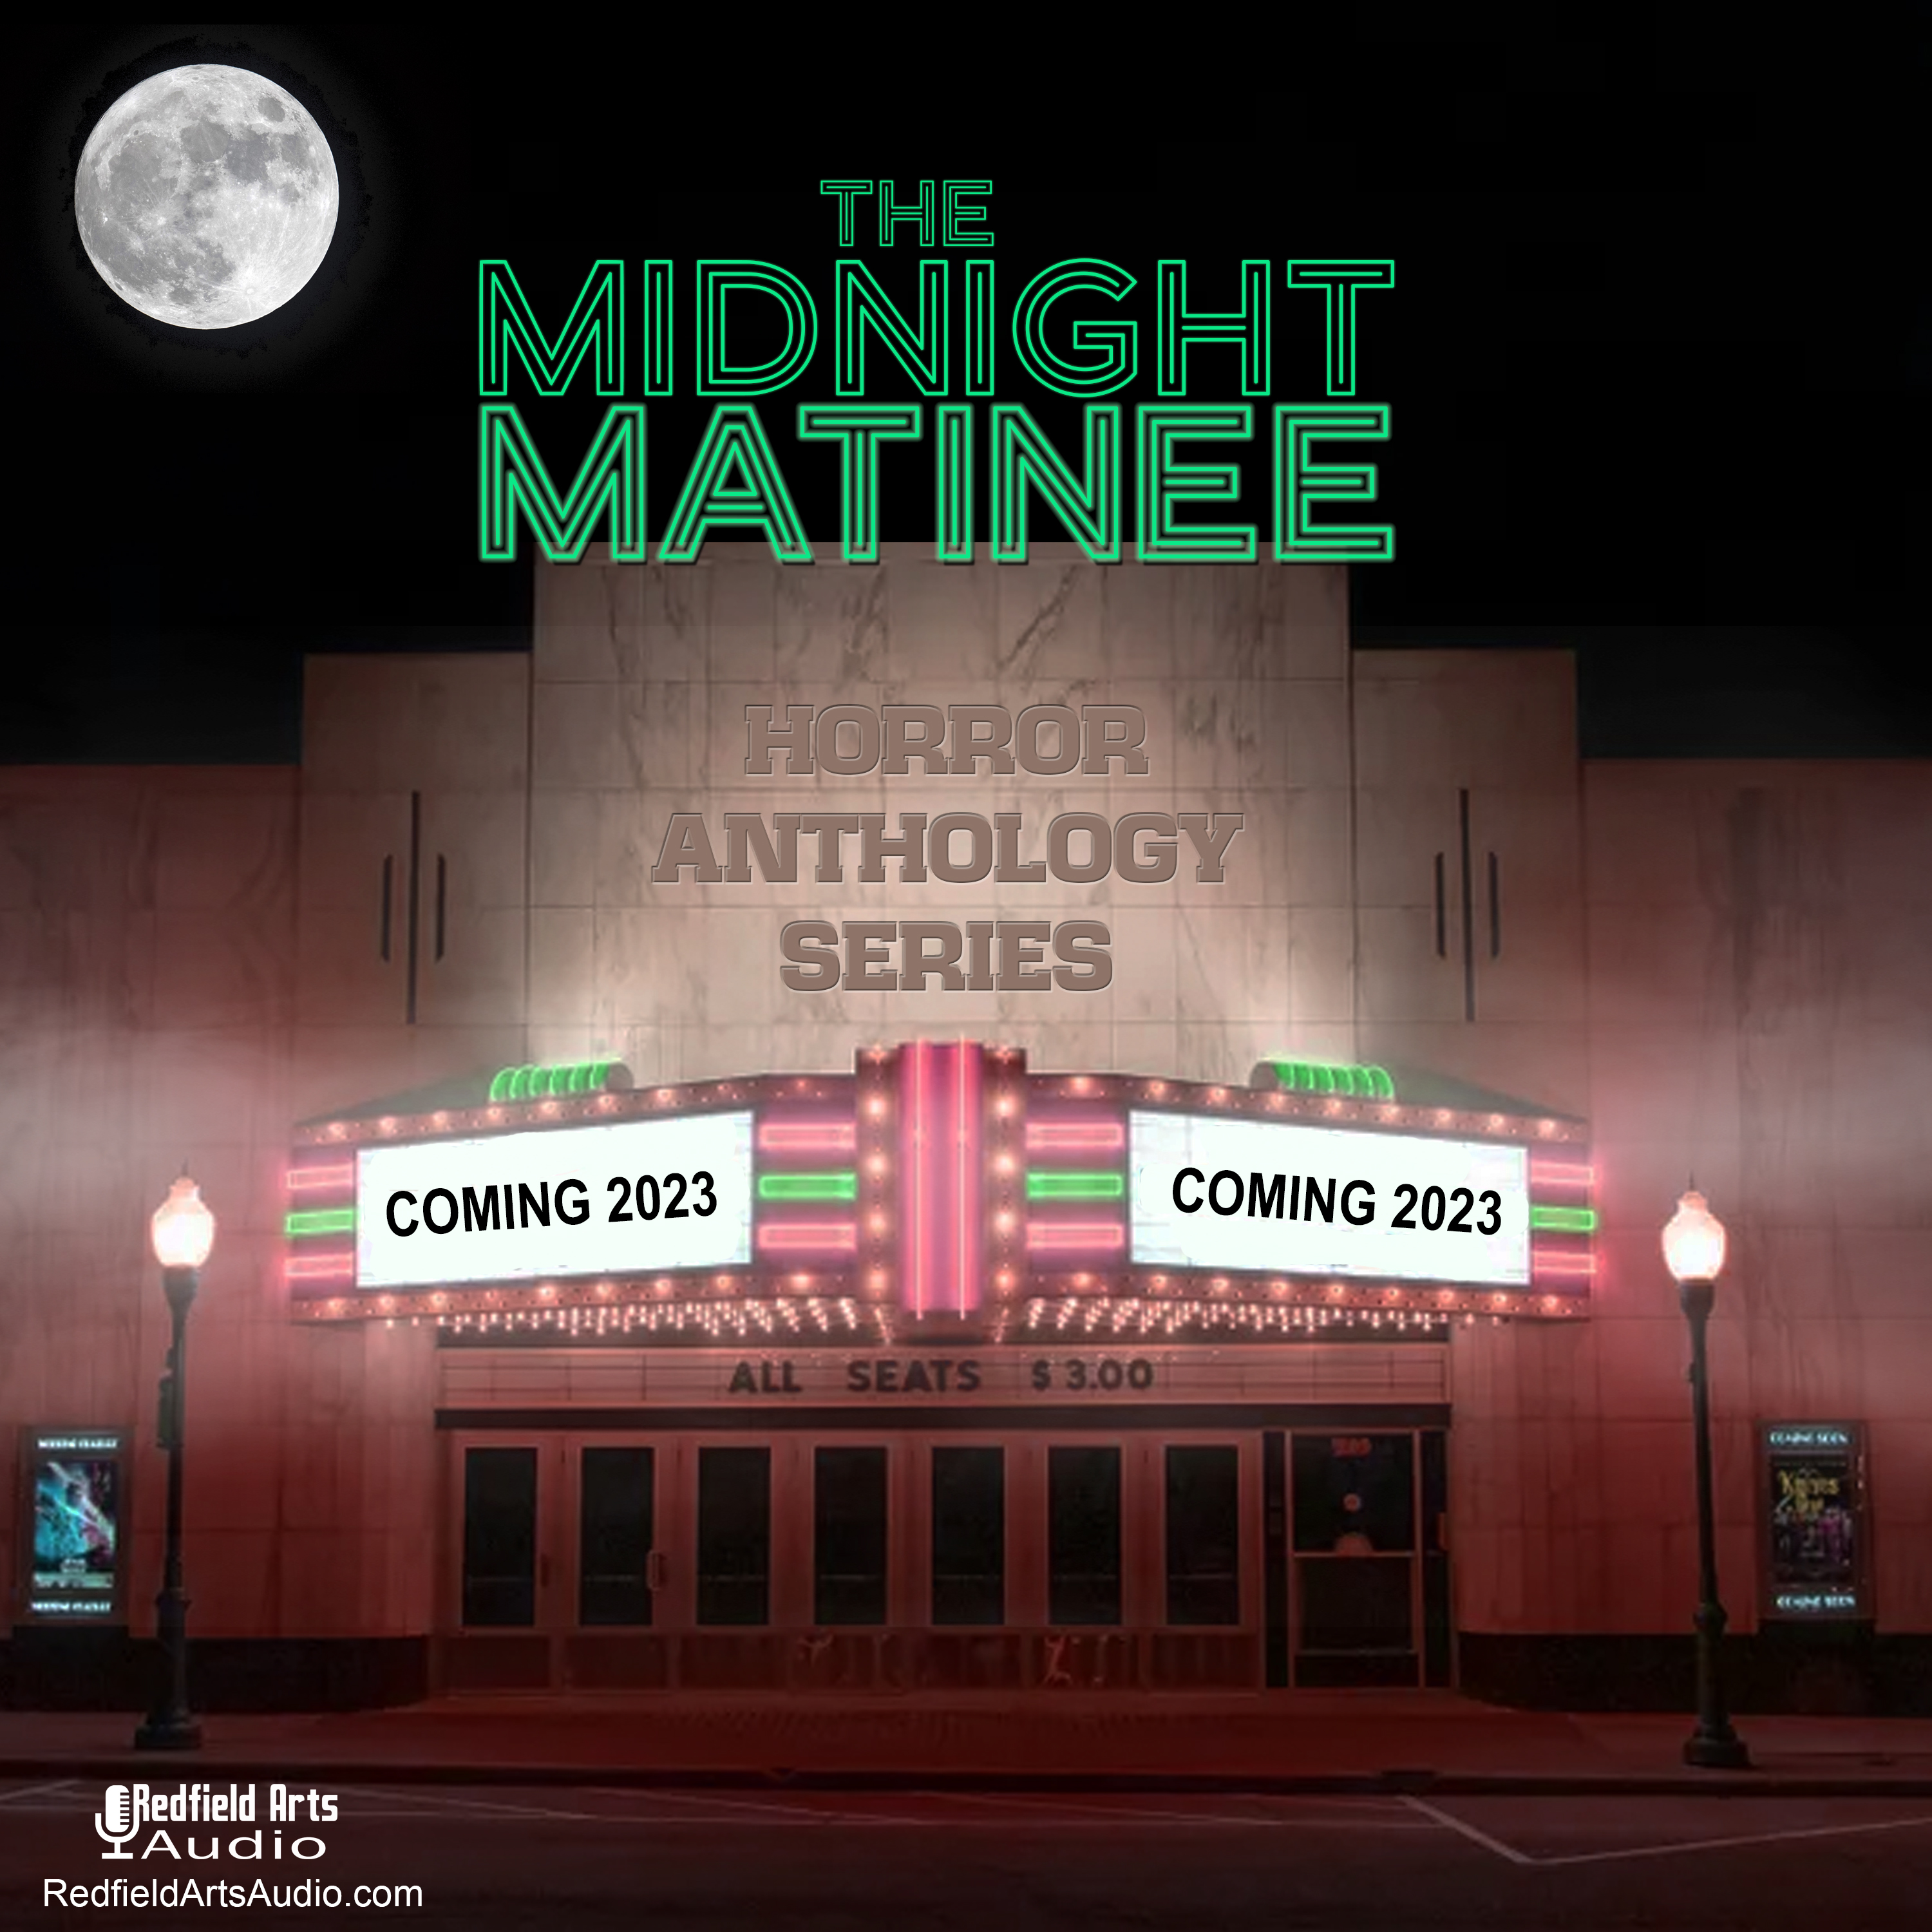 The Midnight Matinee